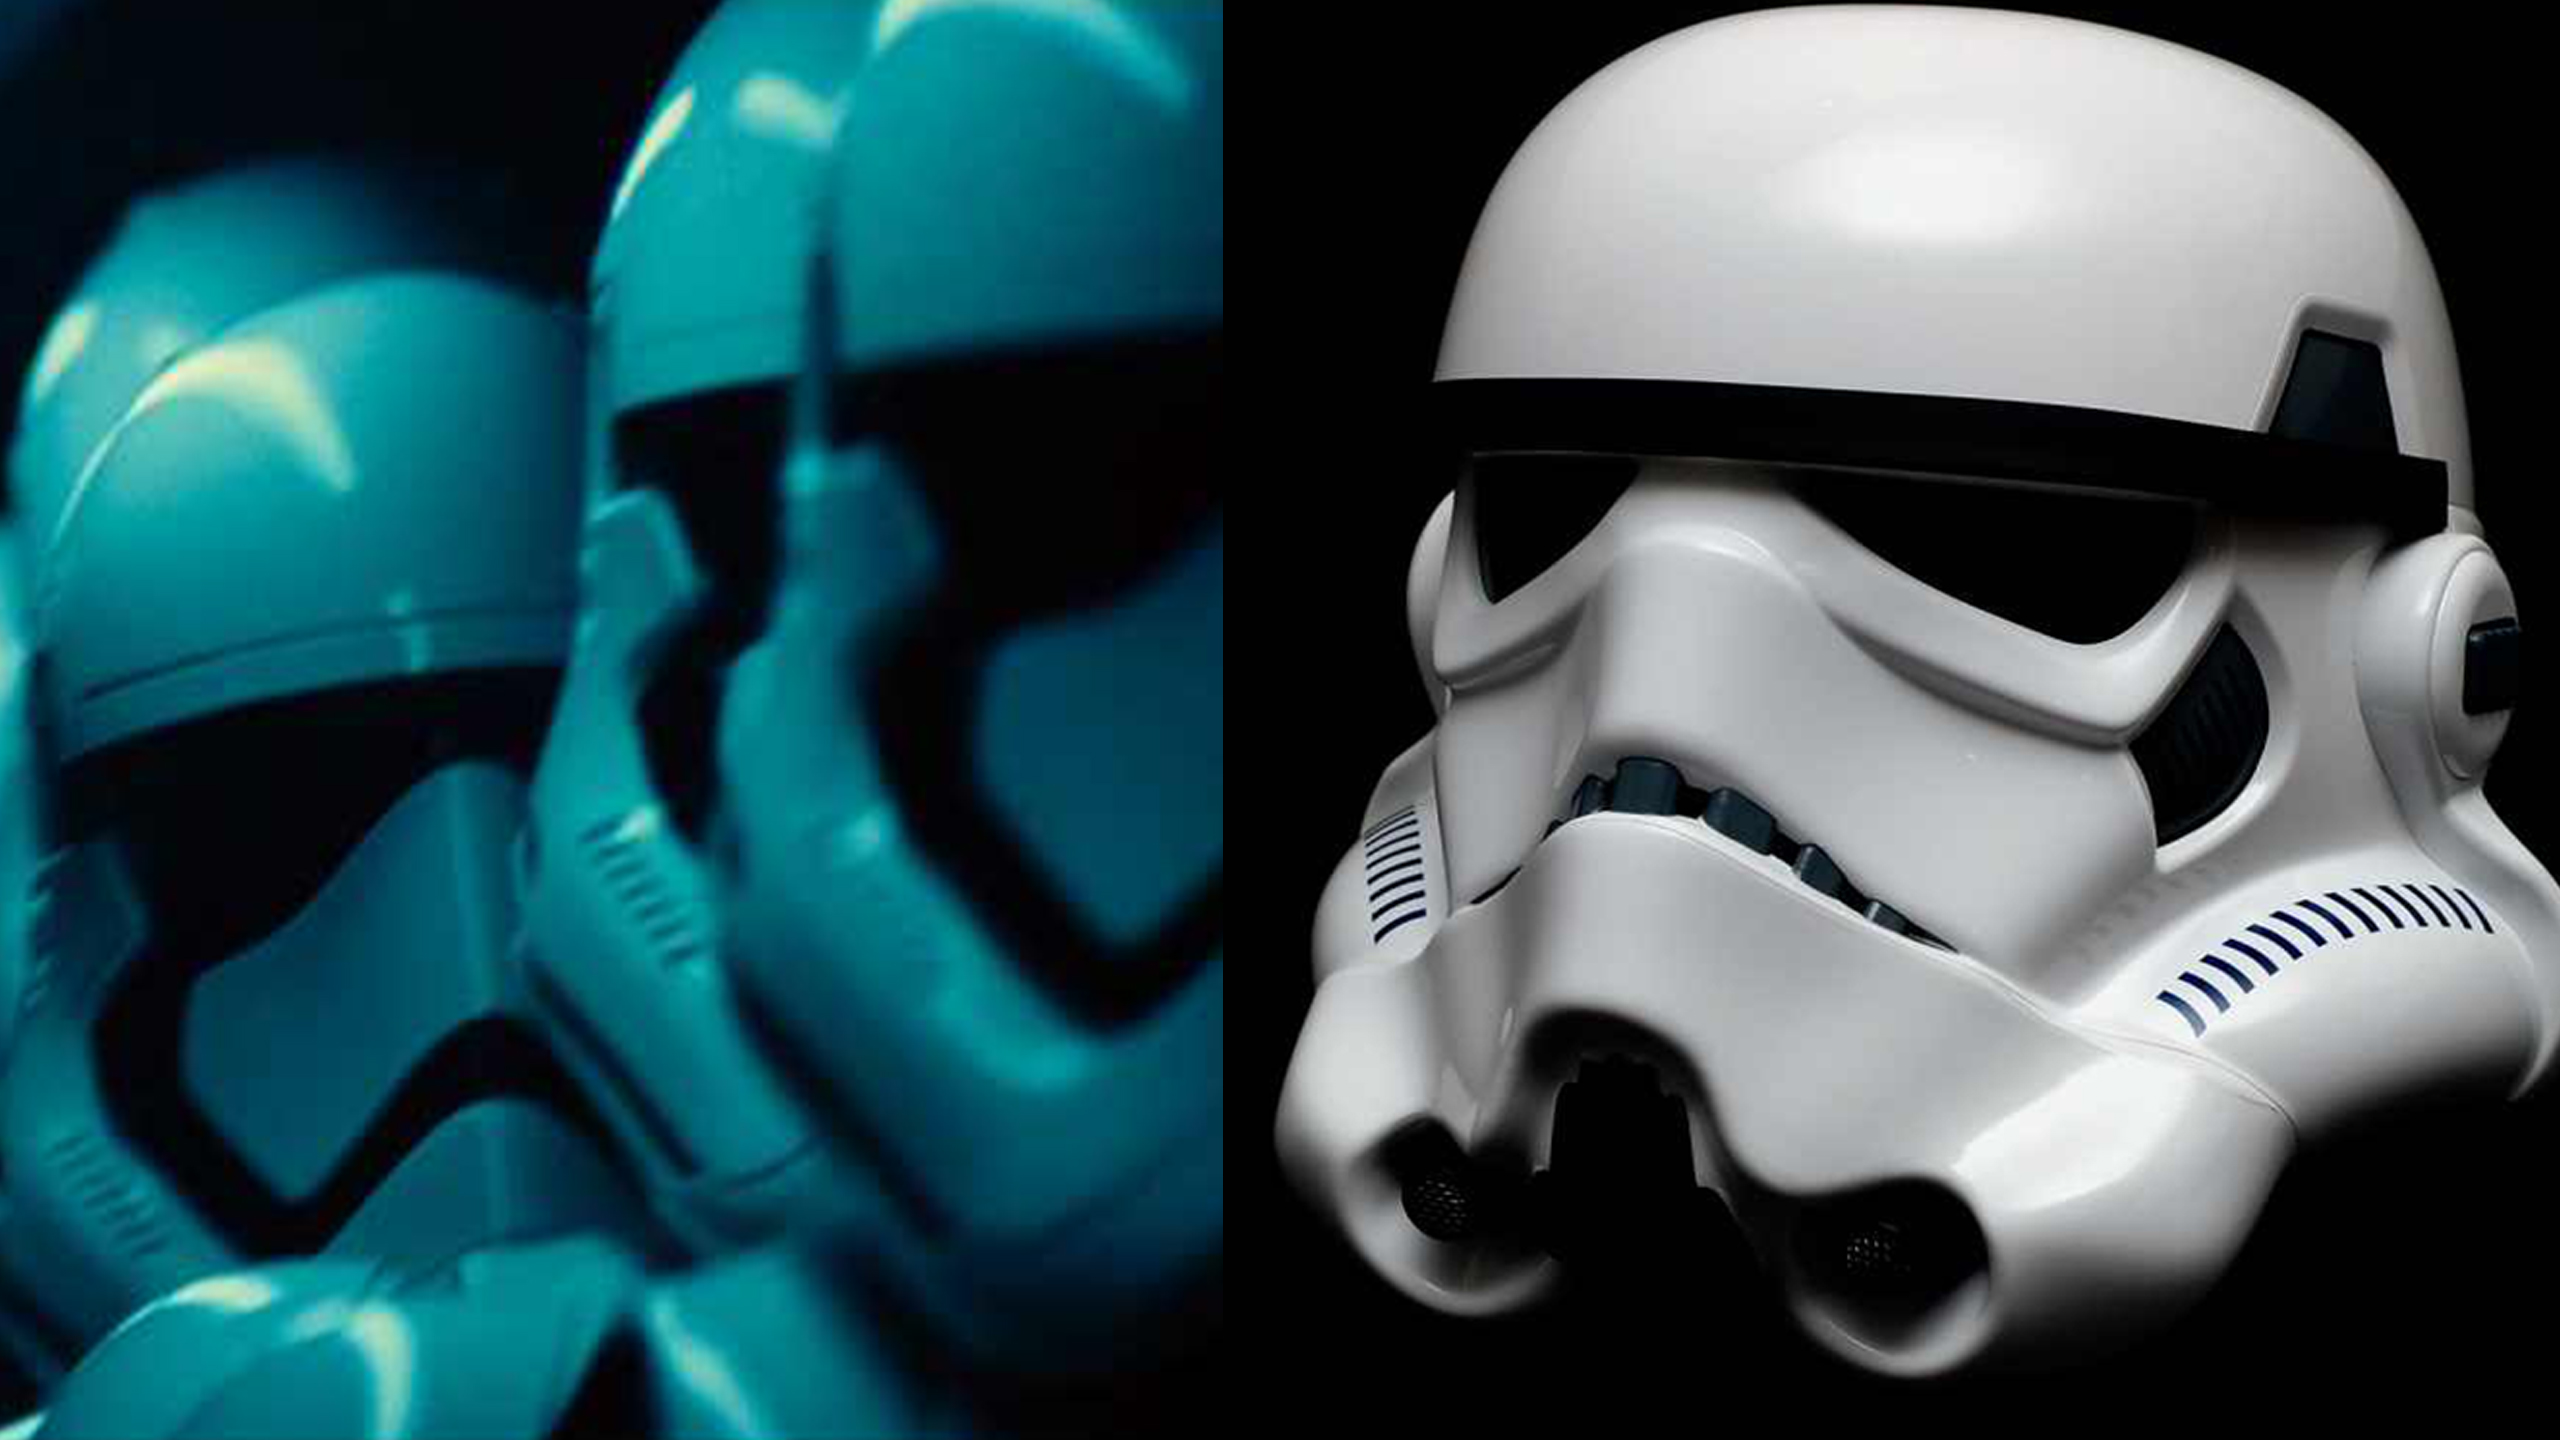 storm_trooper_helmet_ vs_roboraptor.blog.hu.jpg